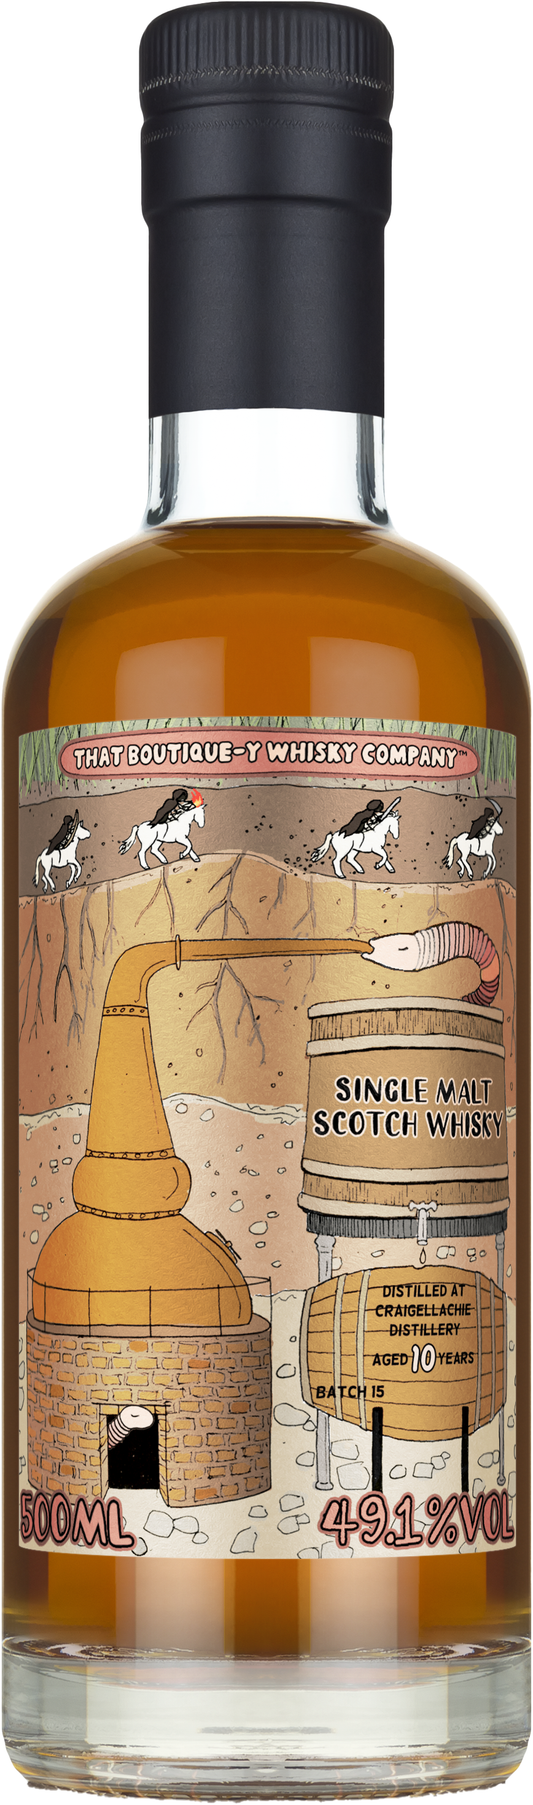 That Boutique-Y Whisky Company Craigellachie 10 Year Batch 15 Single Malt Scotch Whisky 500ml